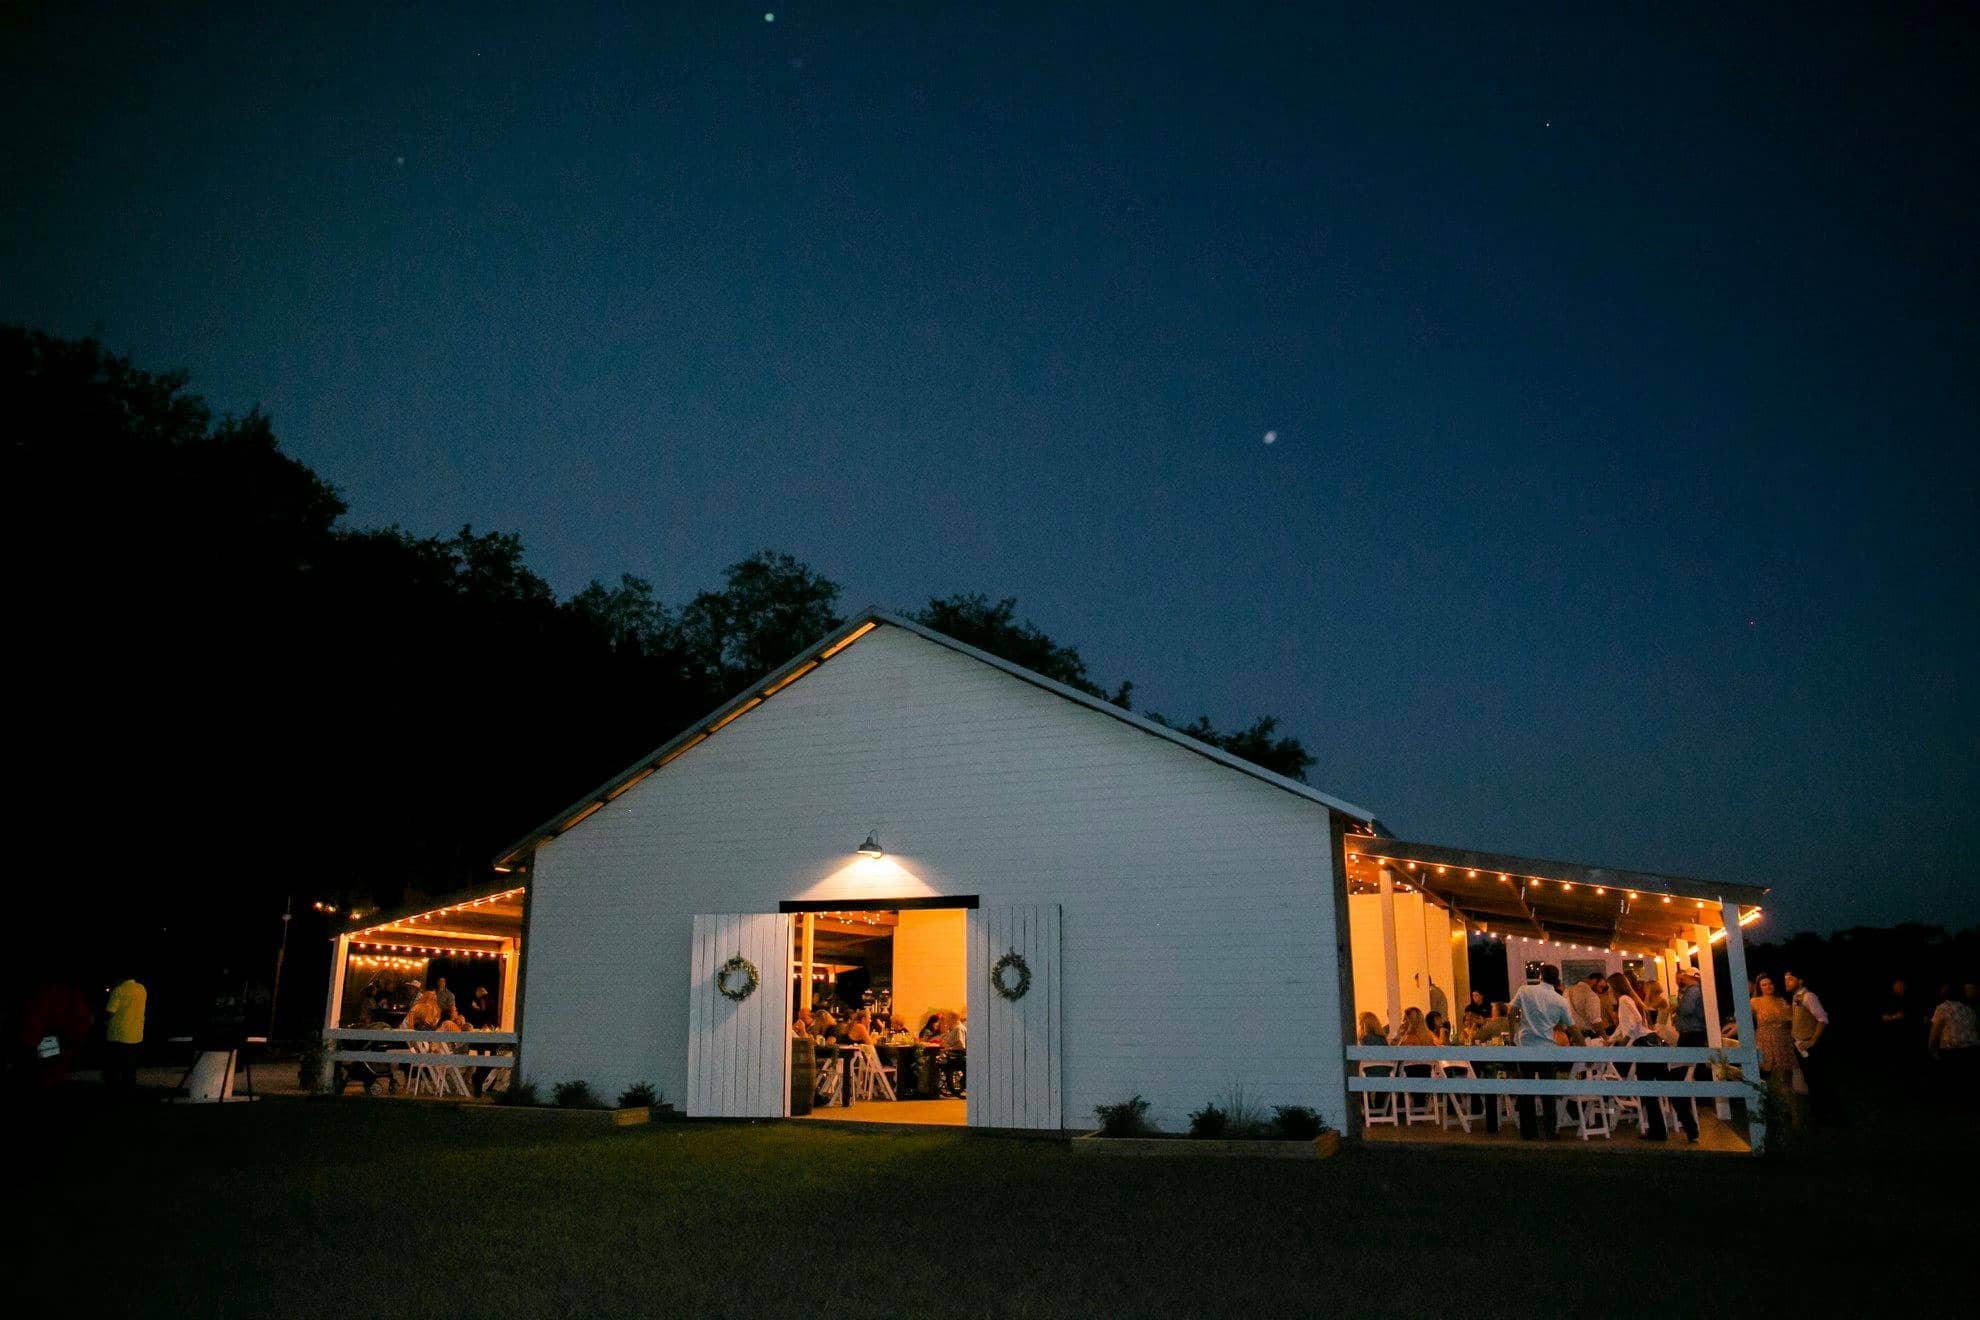 The Orange Blossom Barn - white barn lit up with market lighting